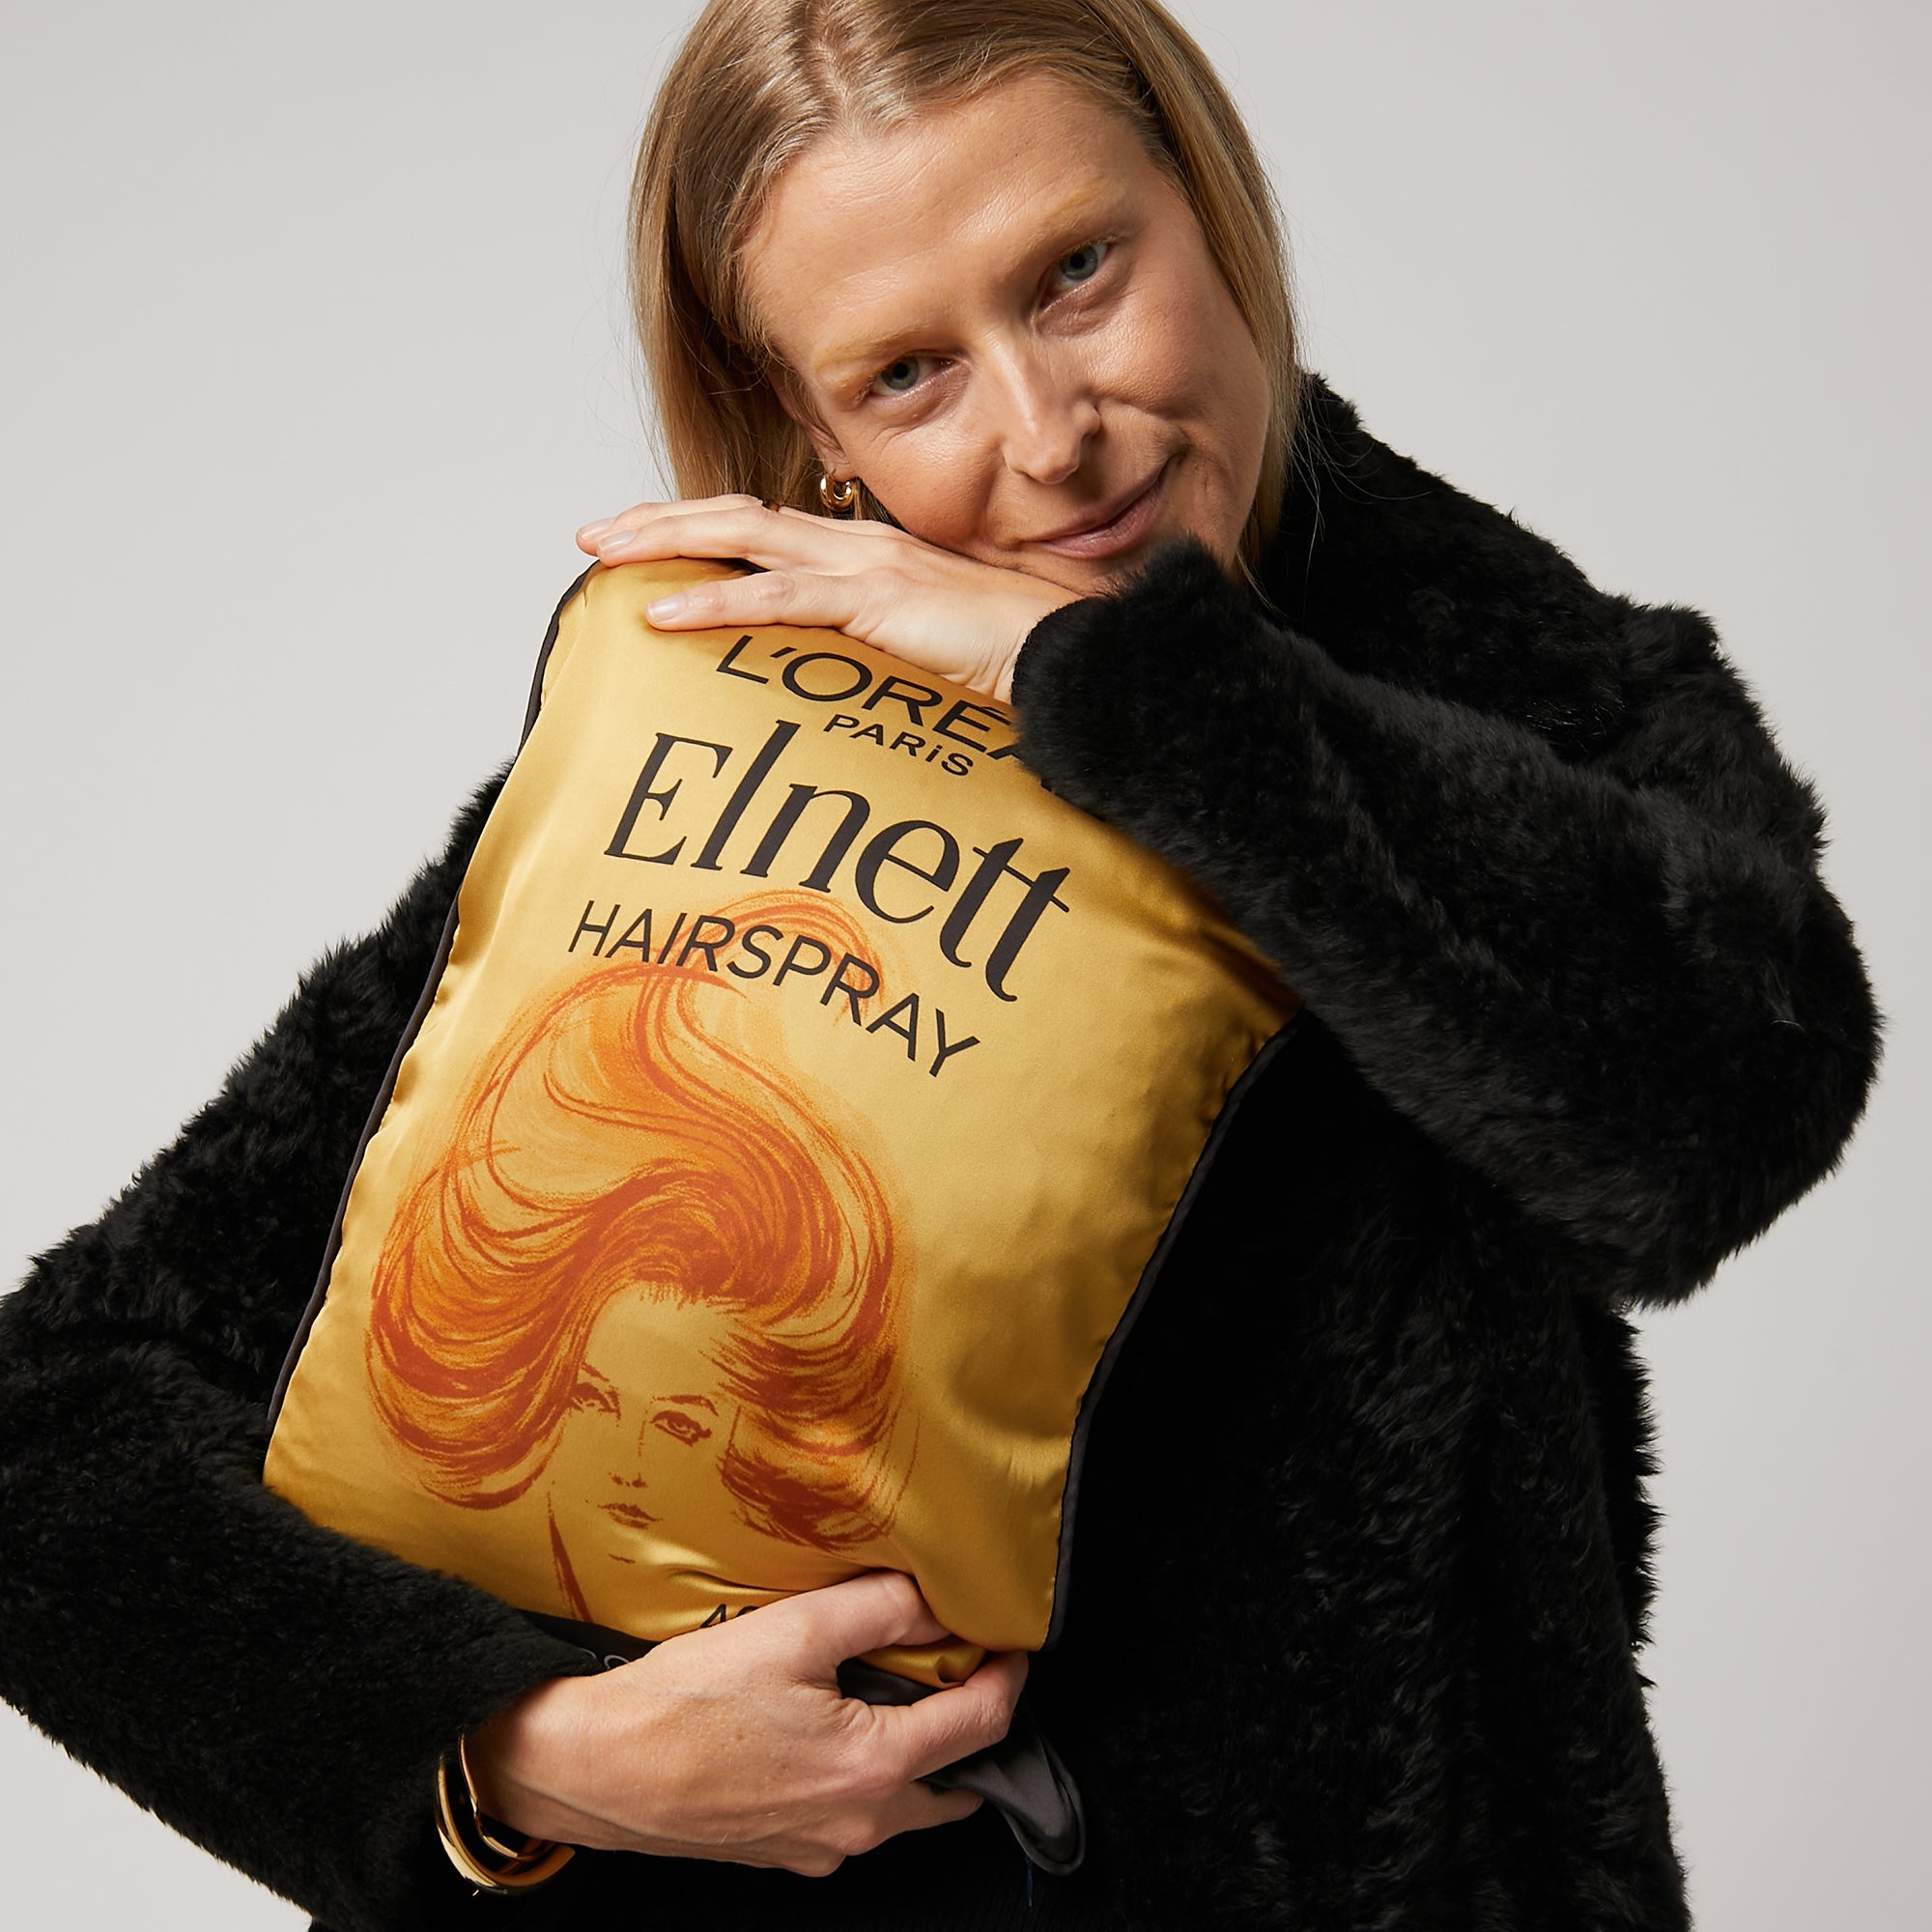 Anya Brands Elnett Pillow -

                  
                    Silk in Gold -
                  

                  Anya Hindmarch US
